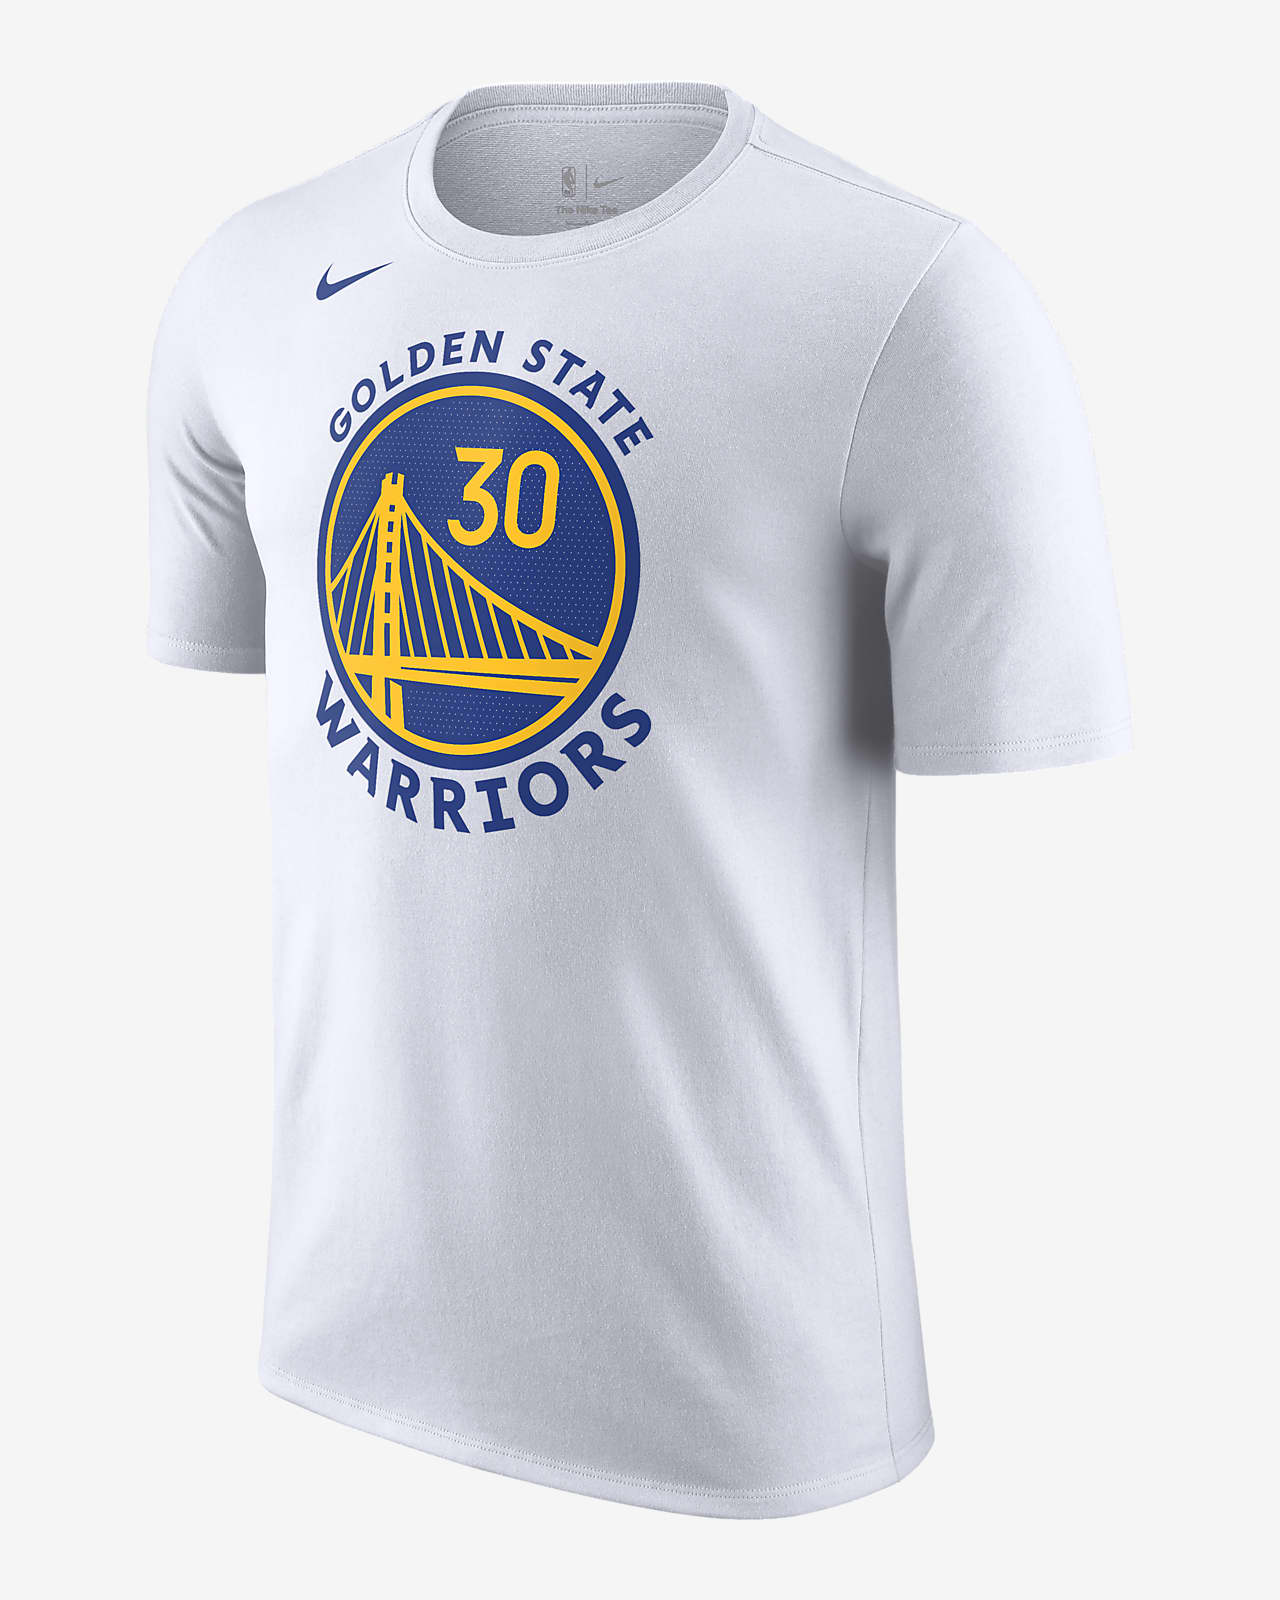 Golden State Warriors T-Shirts